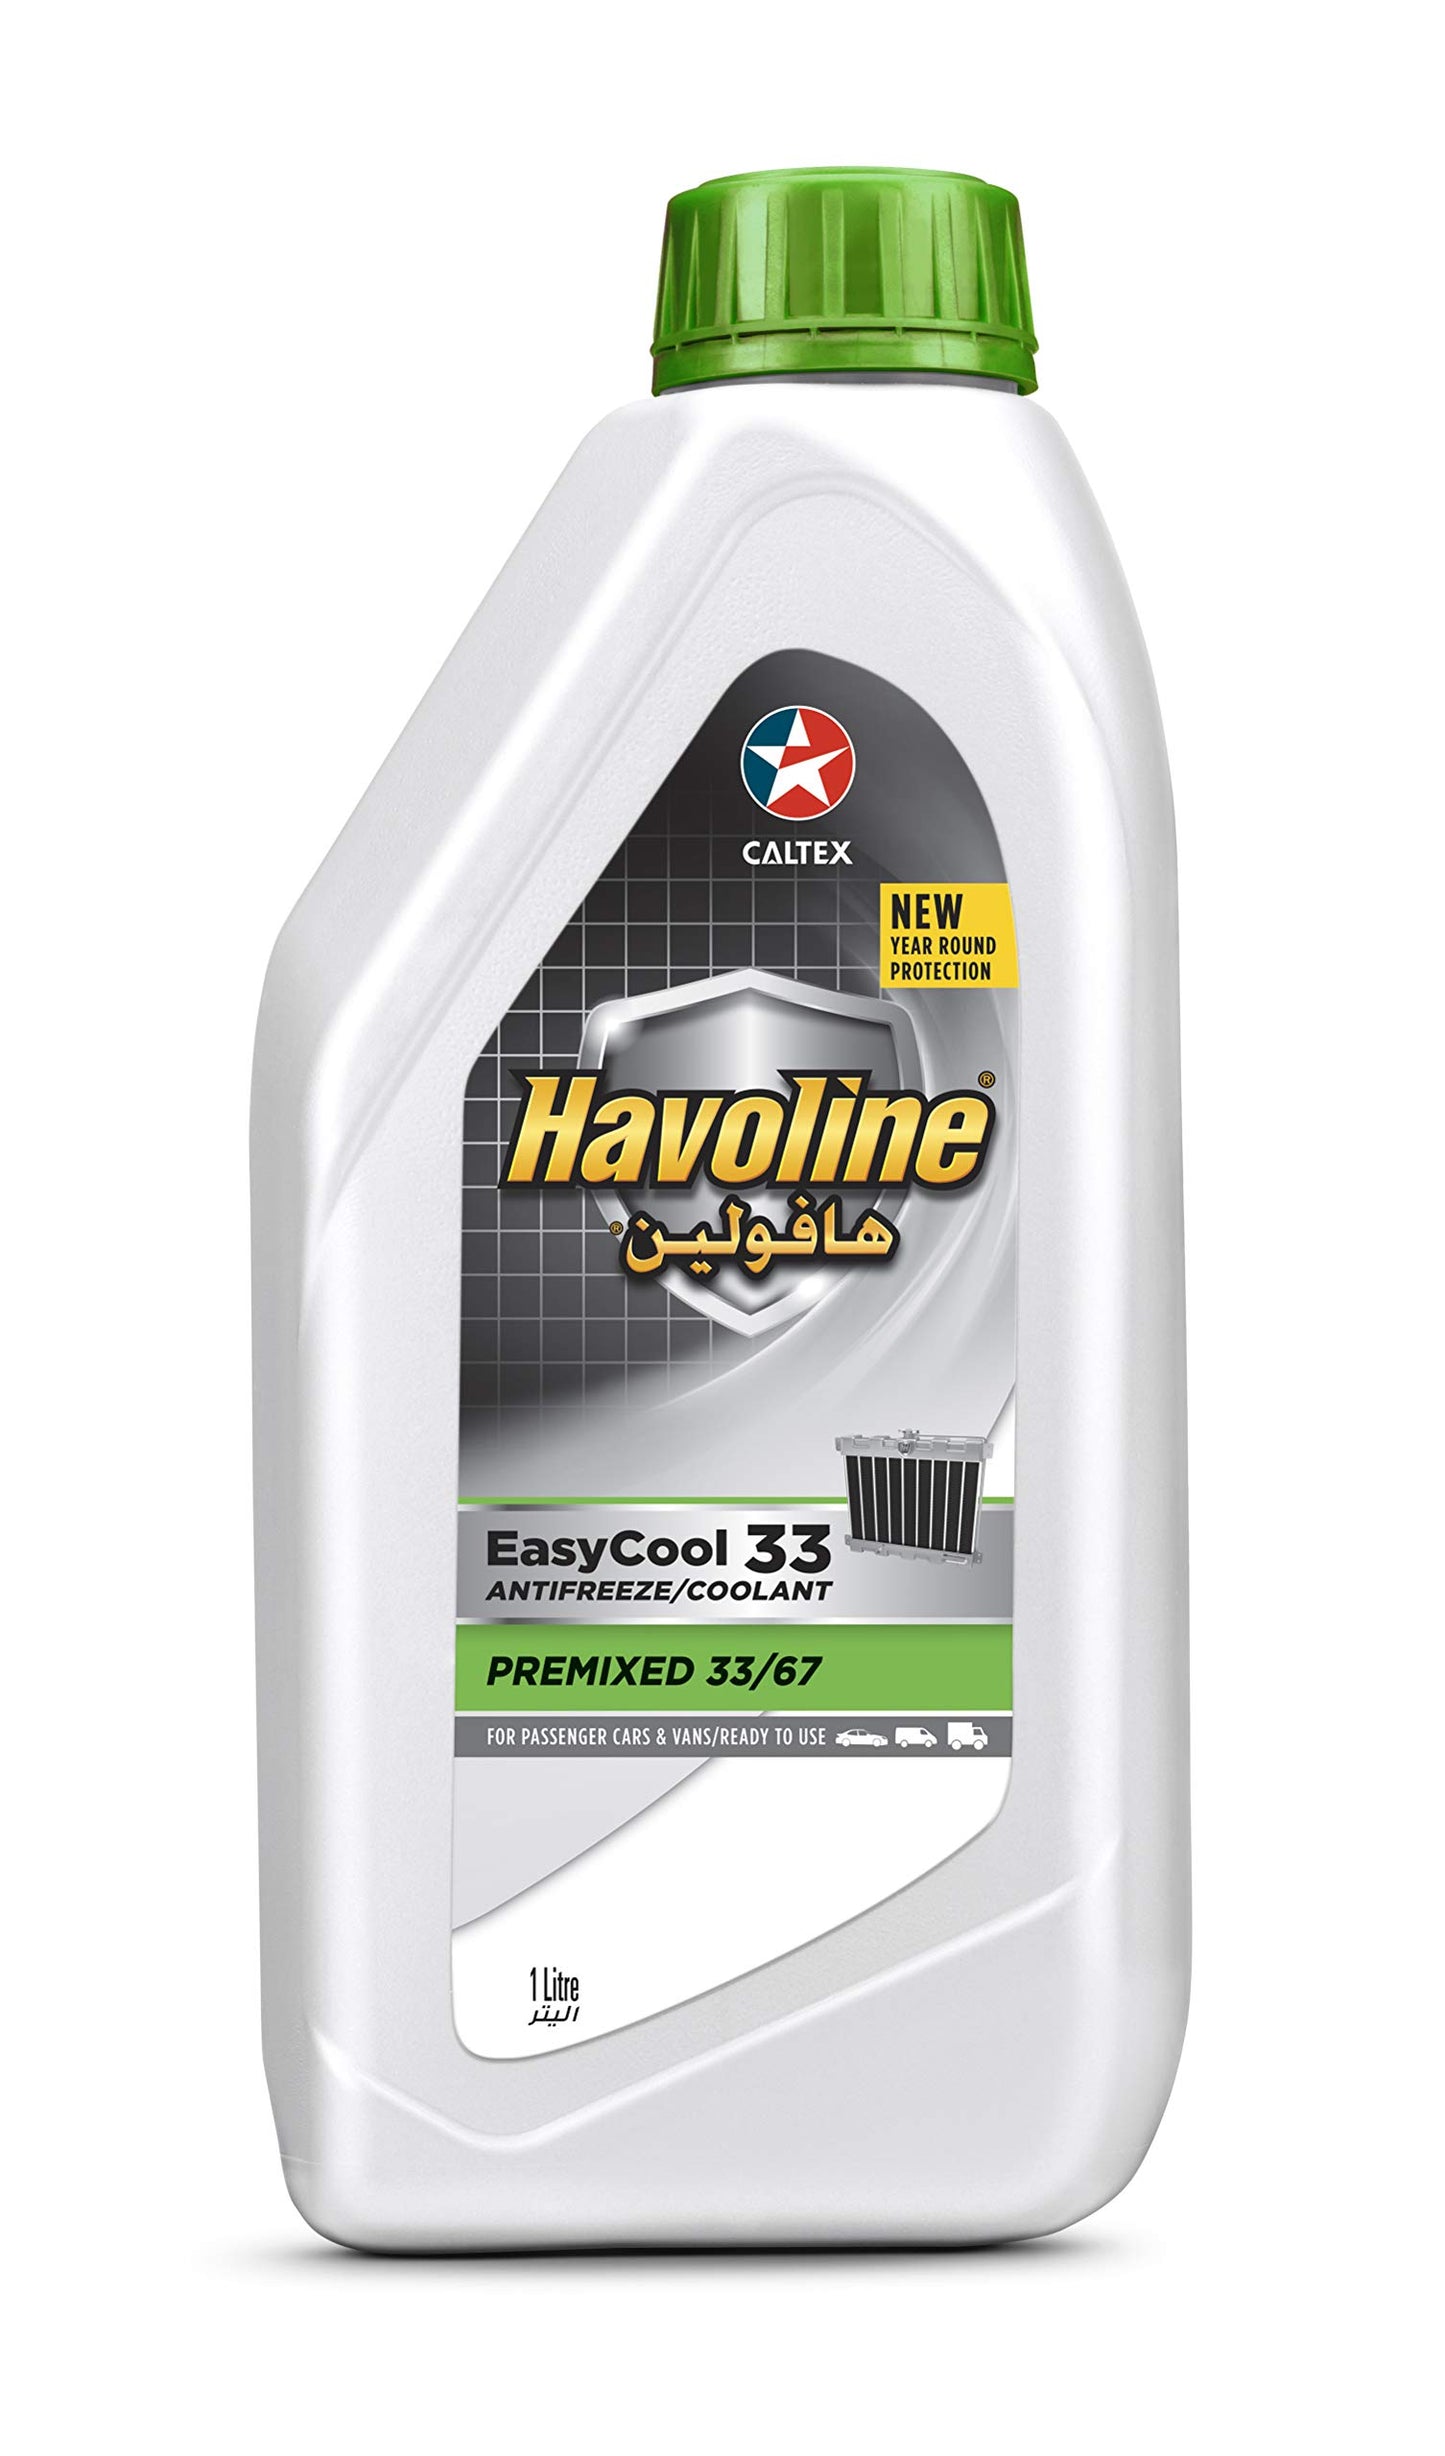 CALTEX Havoline EasyCool 33 - Antifreeze/Coolant - Premixed 33/67 (1L)